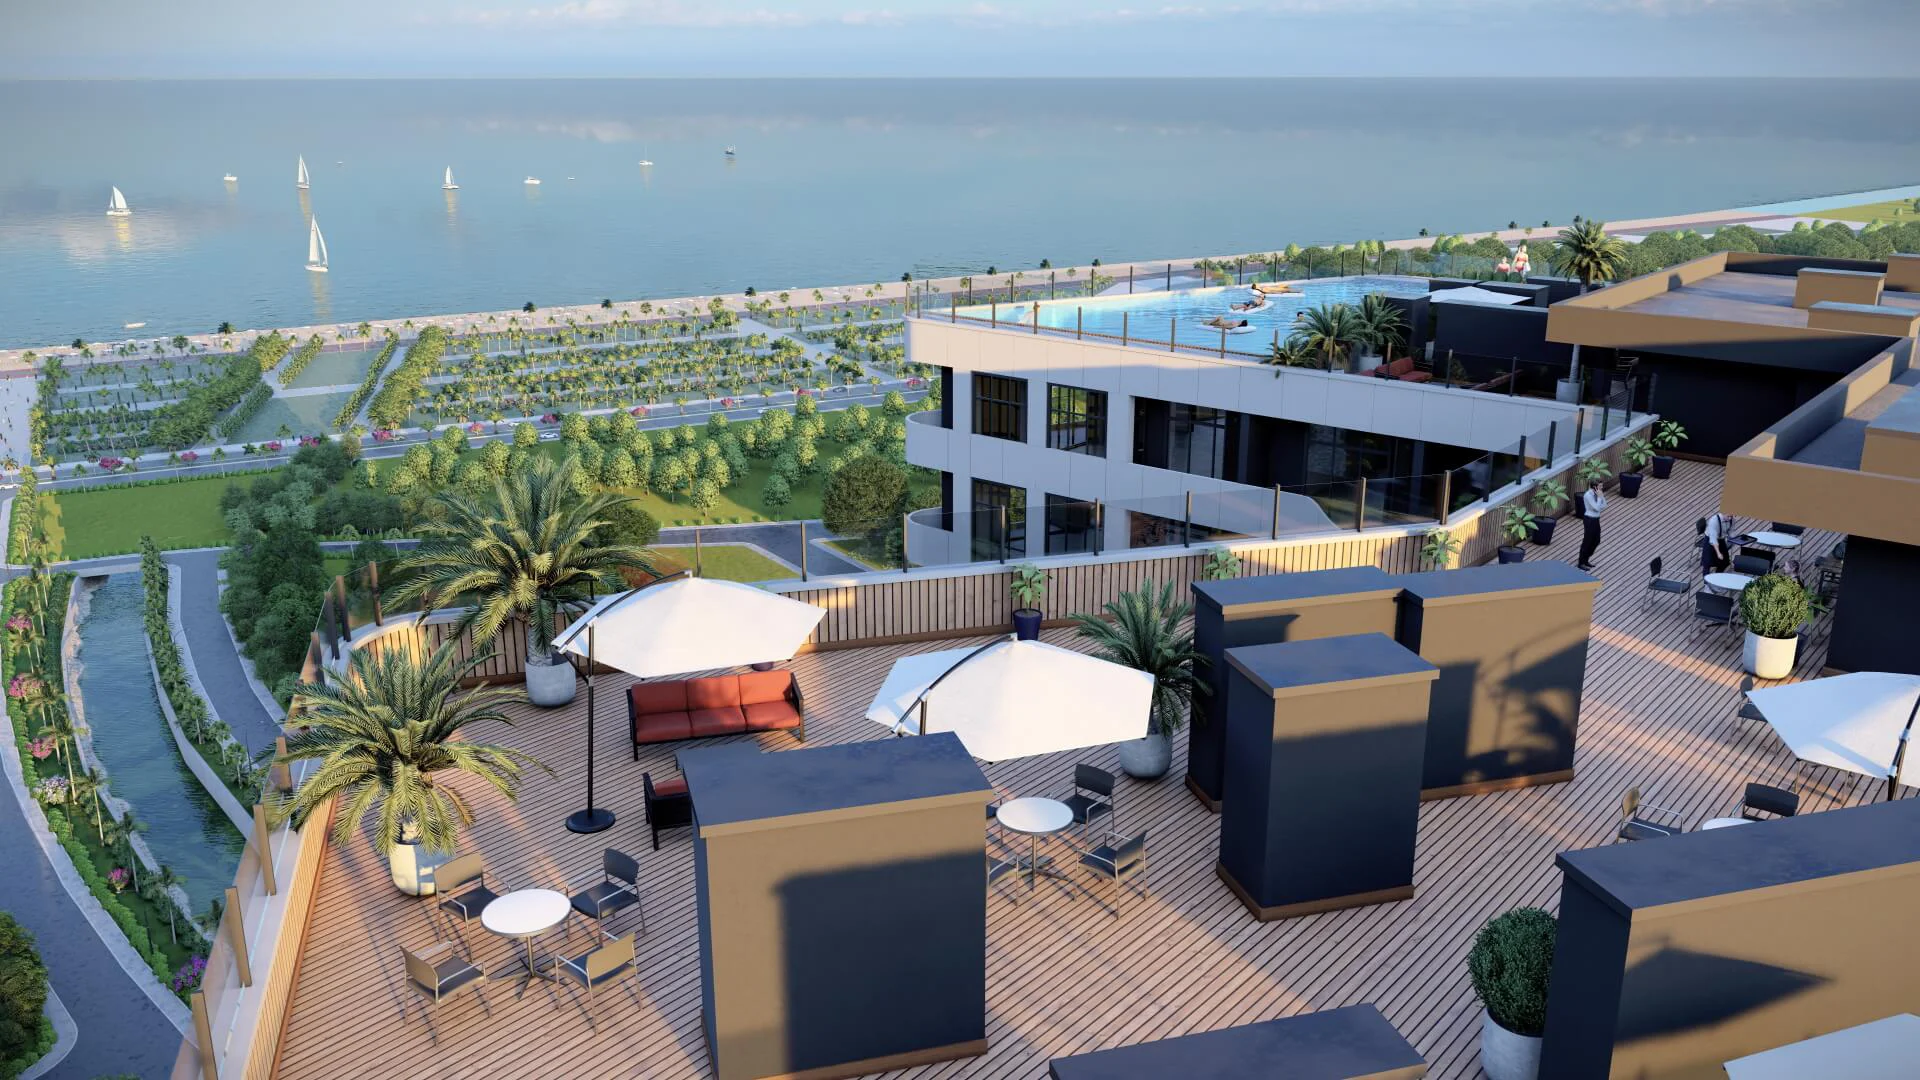 Seaside park hotel - building